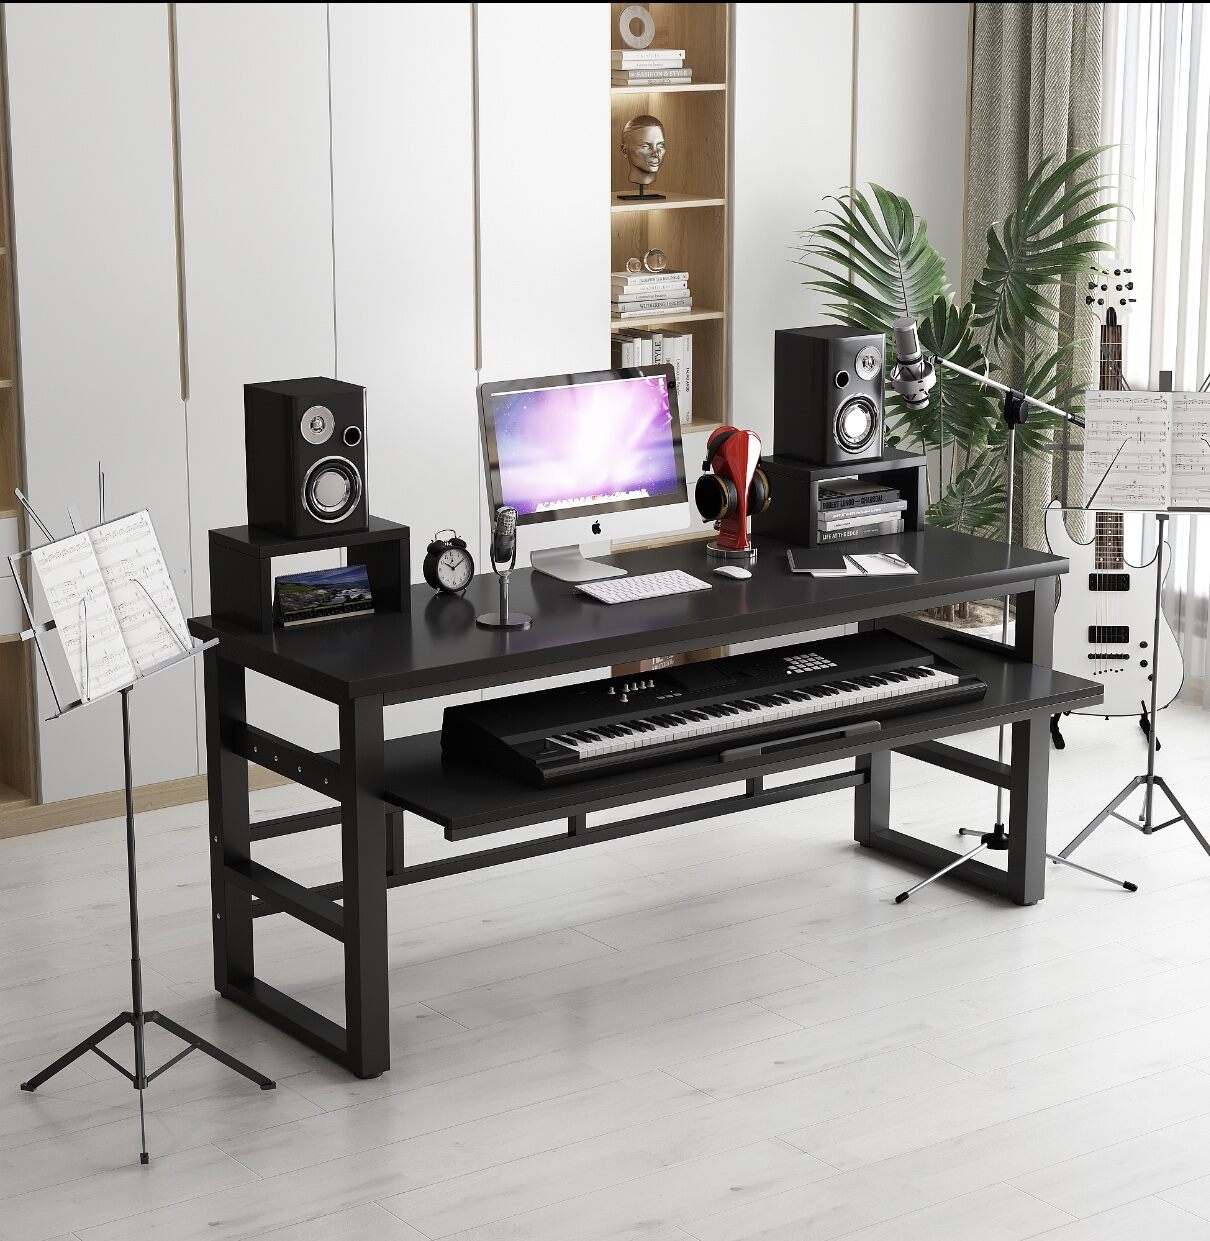 Buy Music Studio Table online 